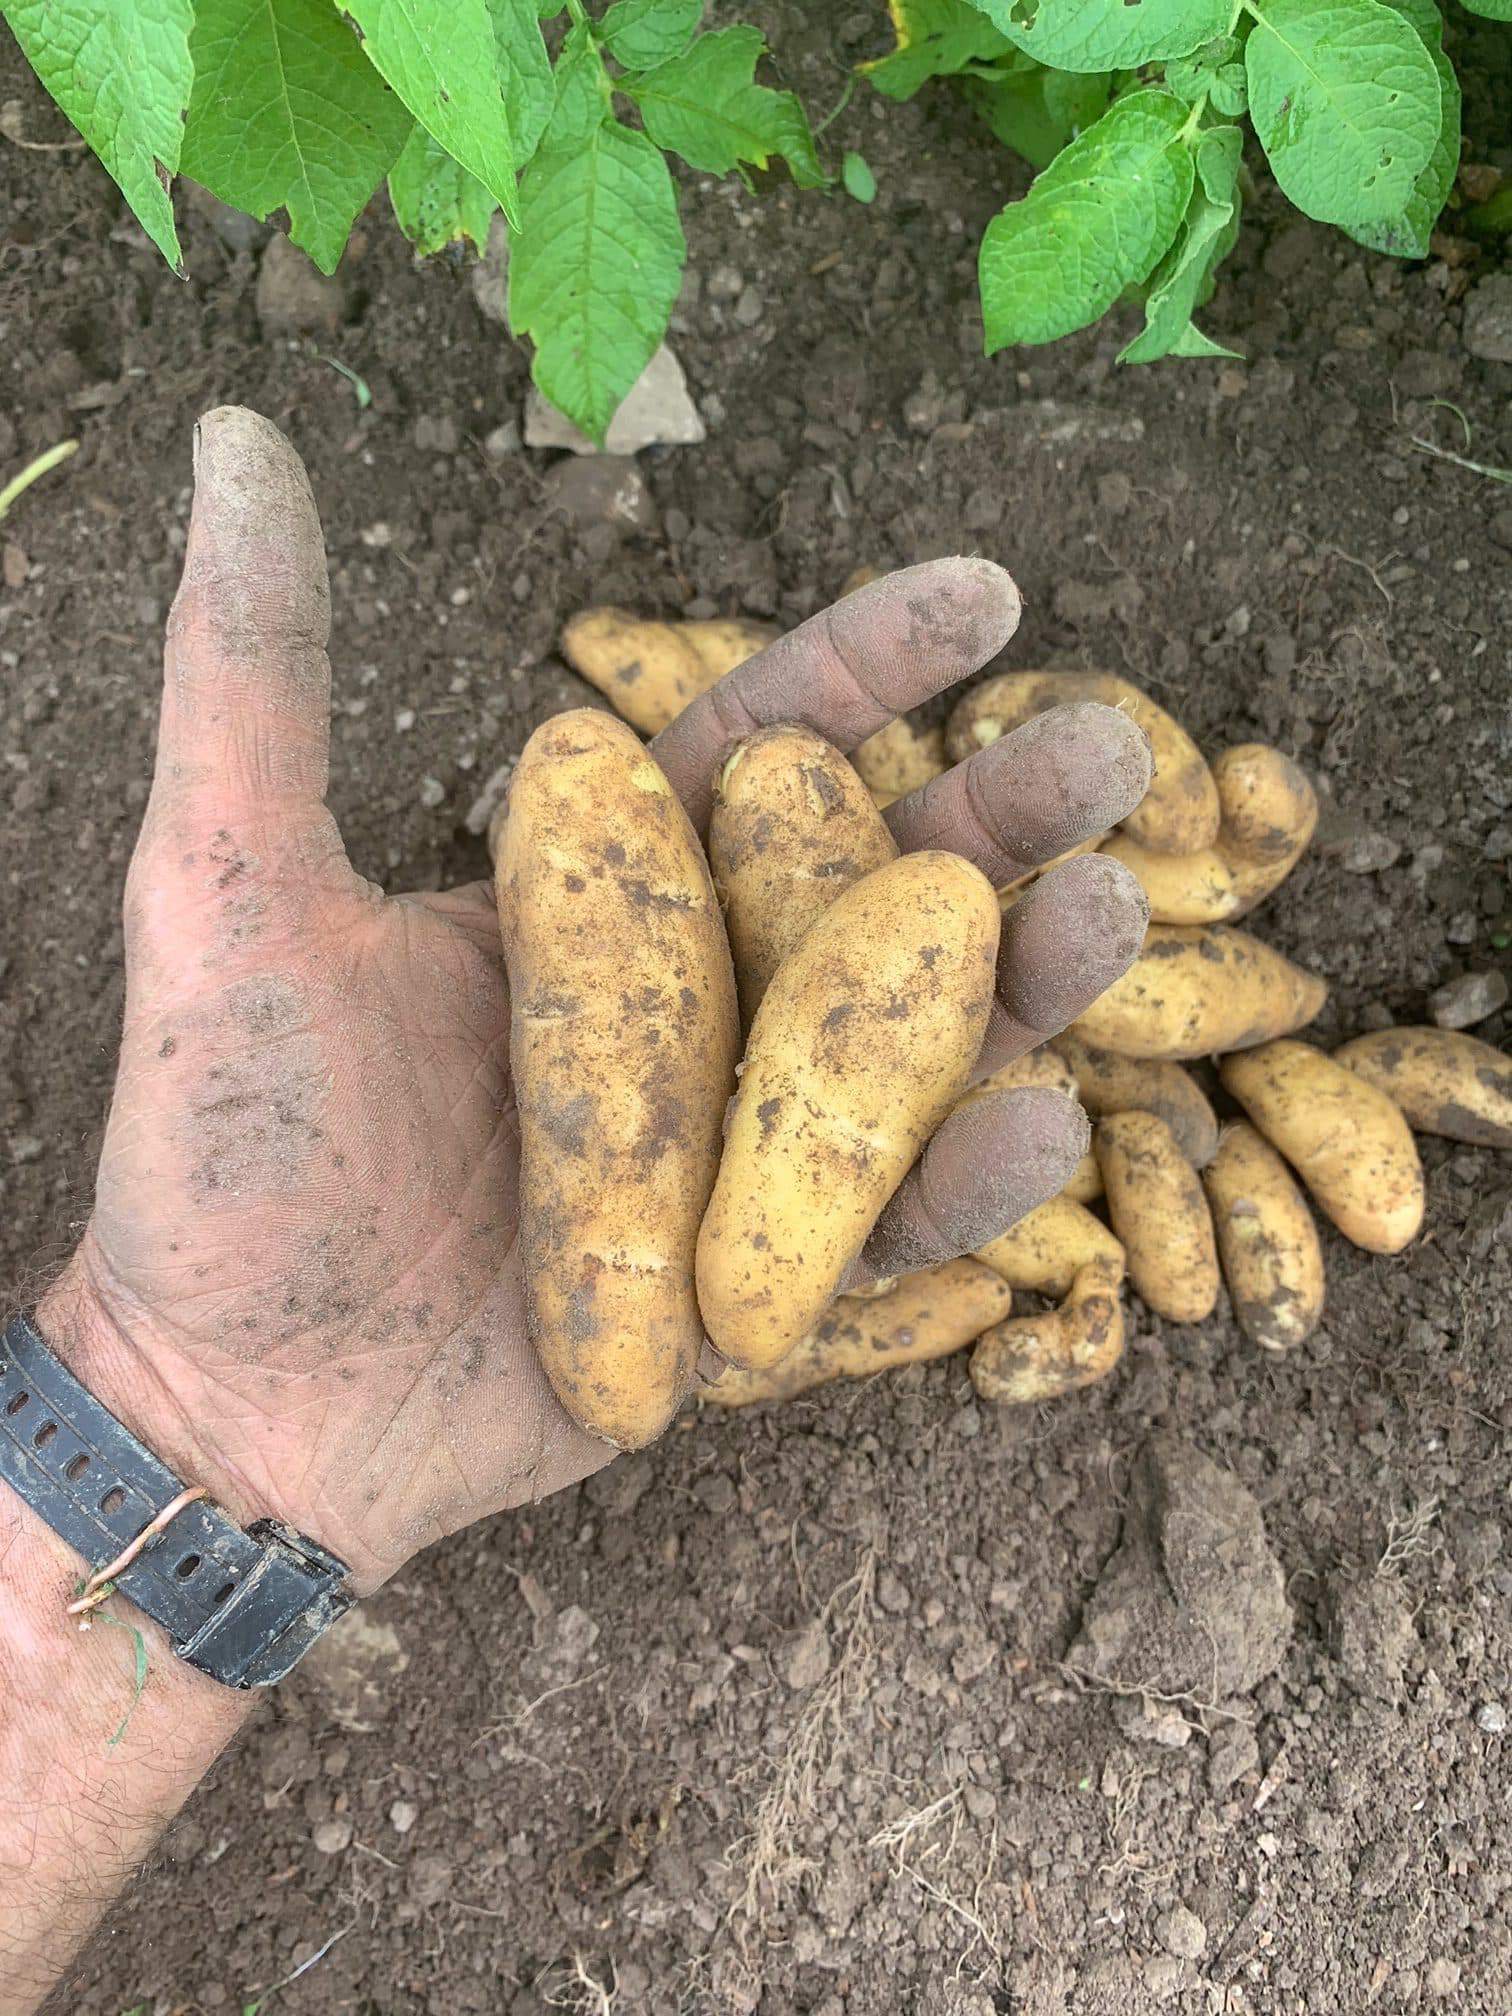 1lb new potatoes, yellow fingerling